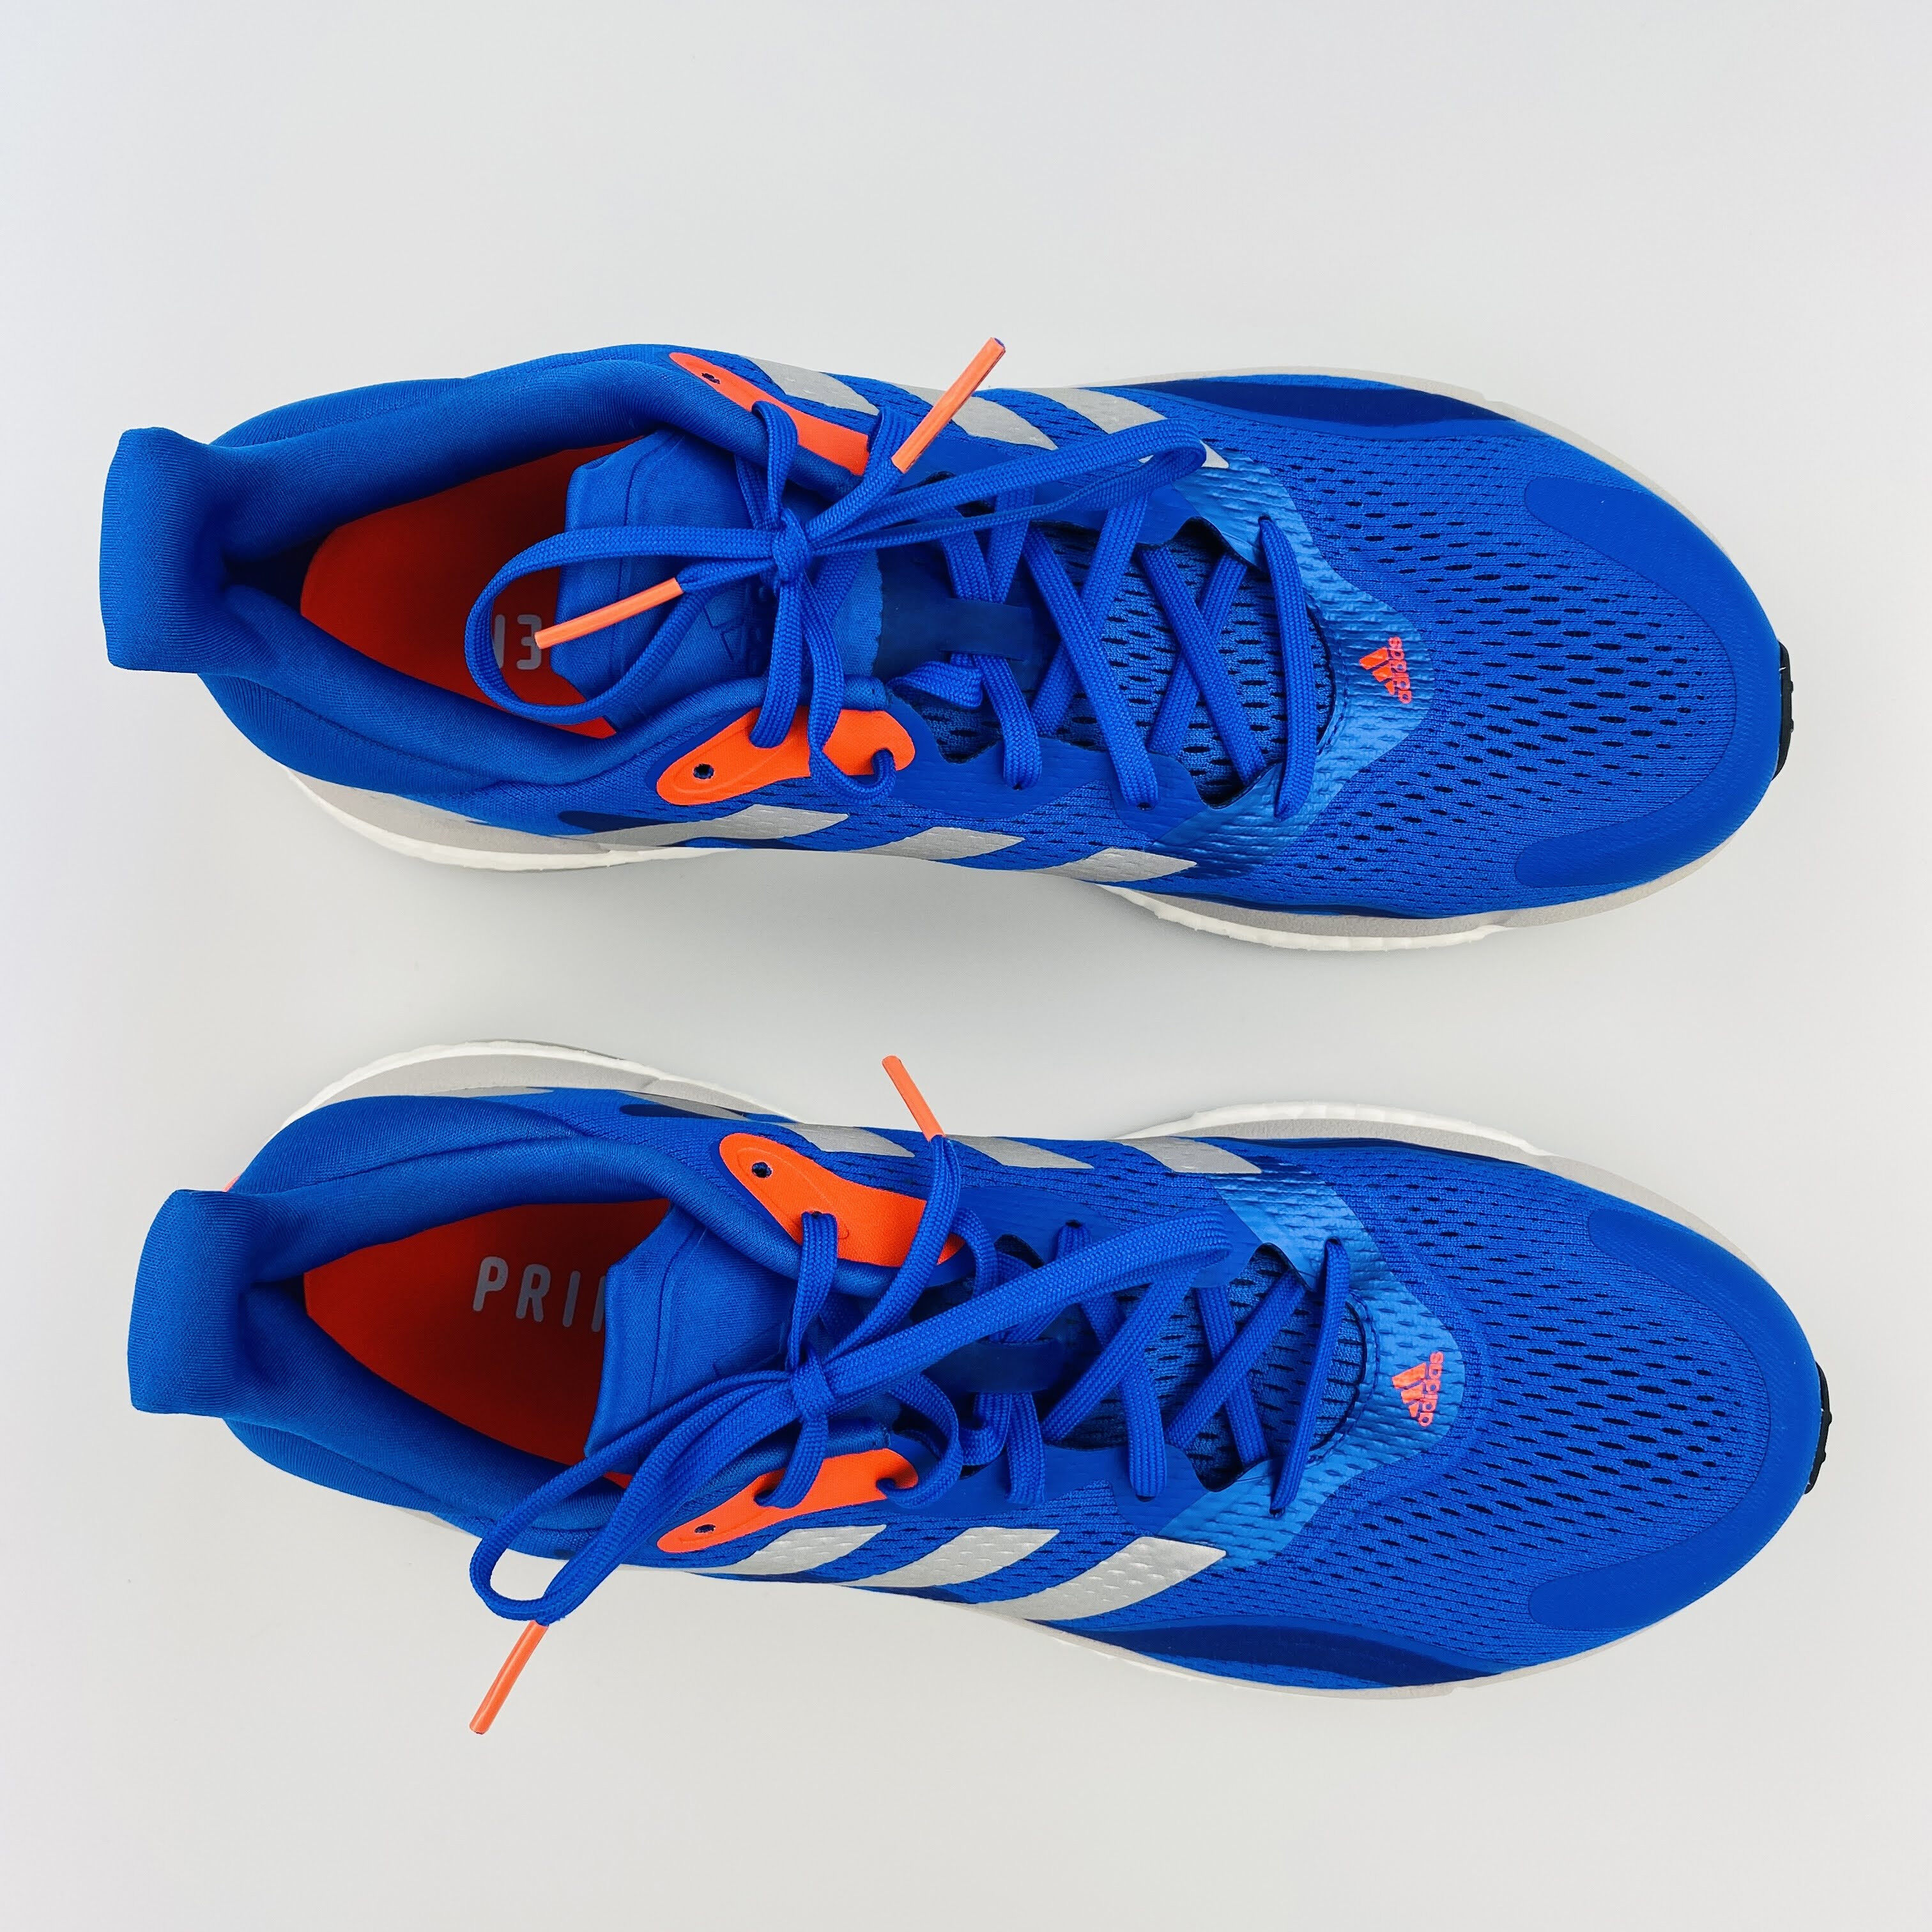 Adidas Solar Boost 3M - Seconde main Chaussures running homme - Bleu - 44.2/3 | Hardloop